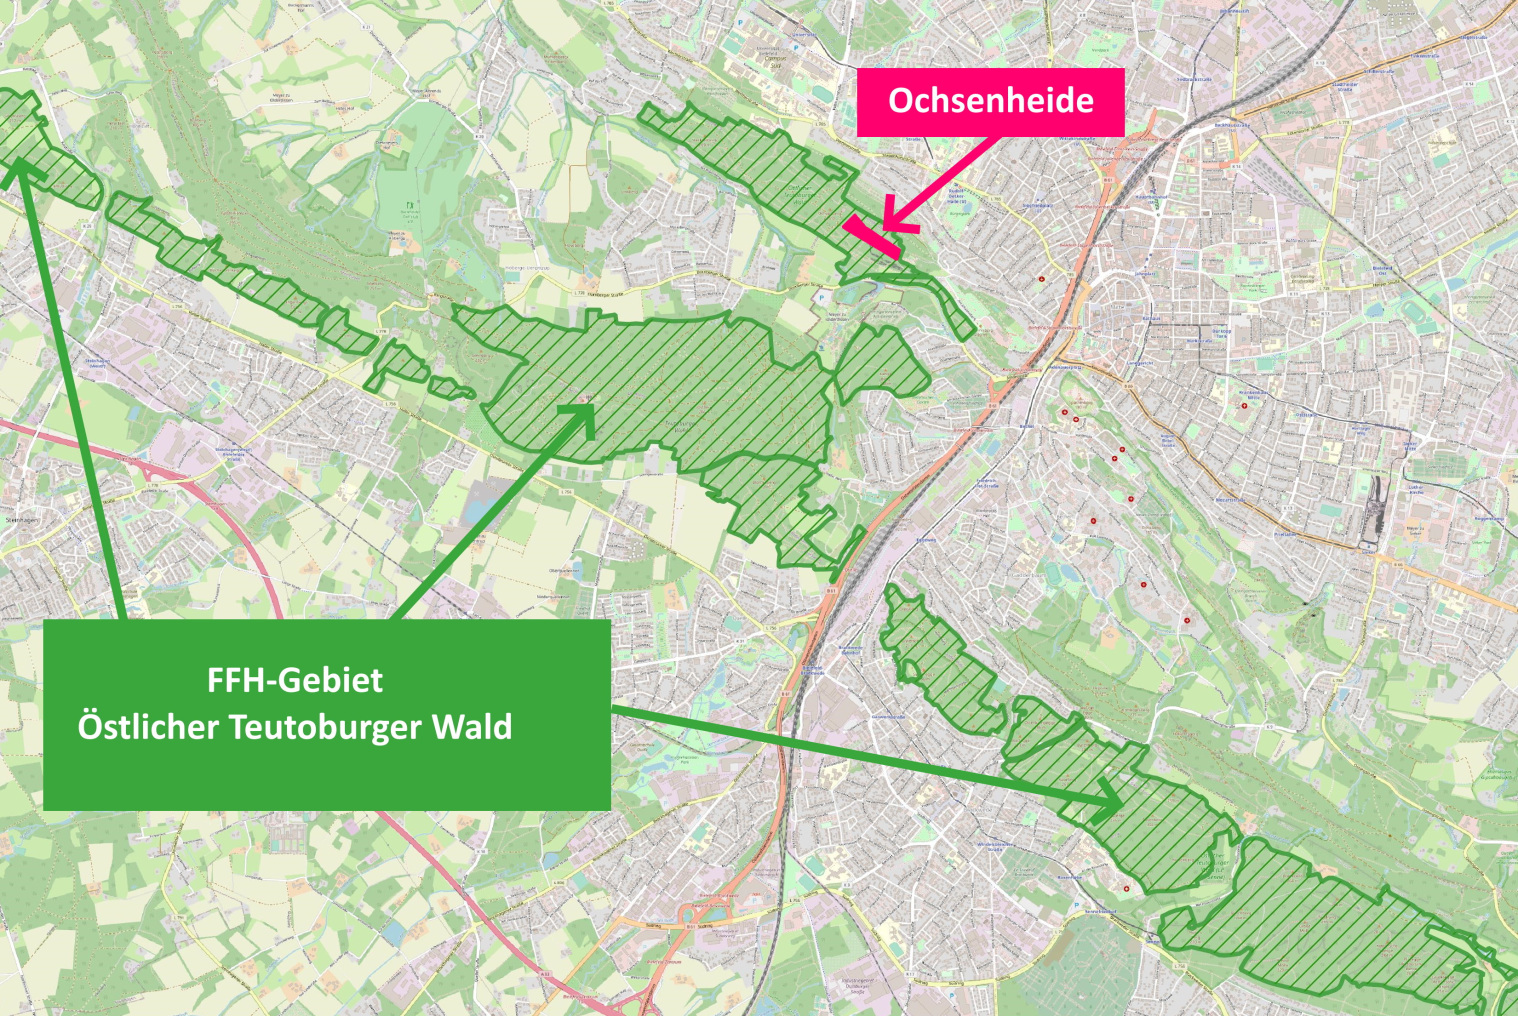 FFH-Gebiet Östlicher Teutoburger Wald mit Ochsenheide; Grafik: Biologische Station Gütersloh/ Bielefeld e.V.